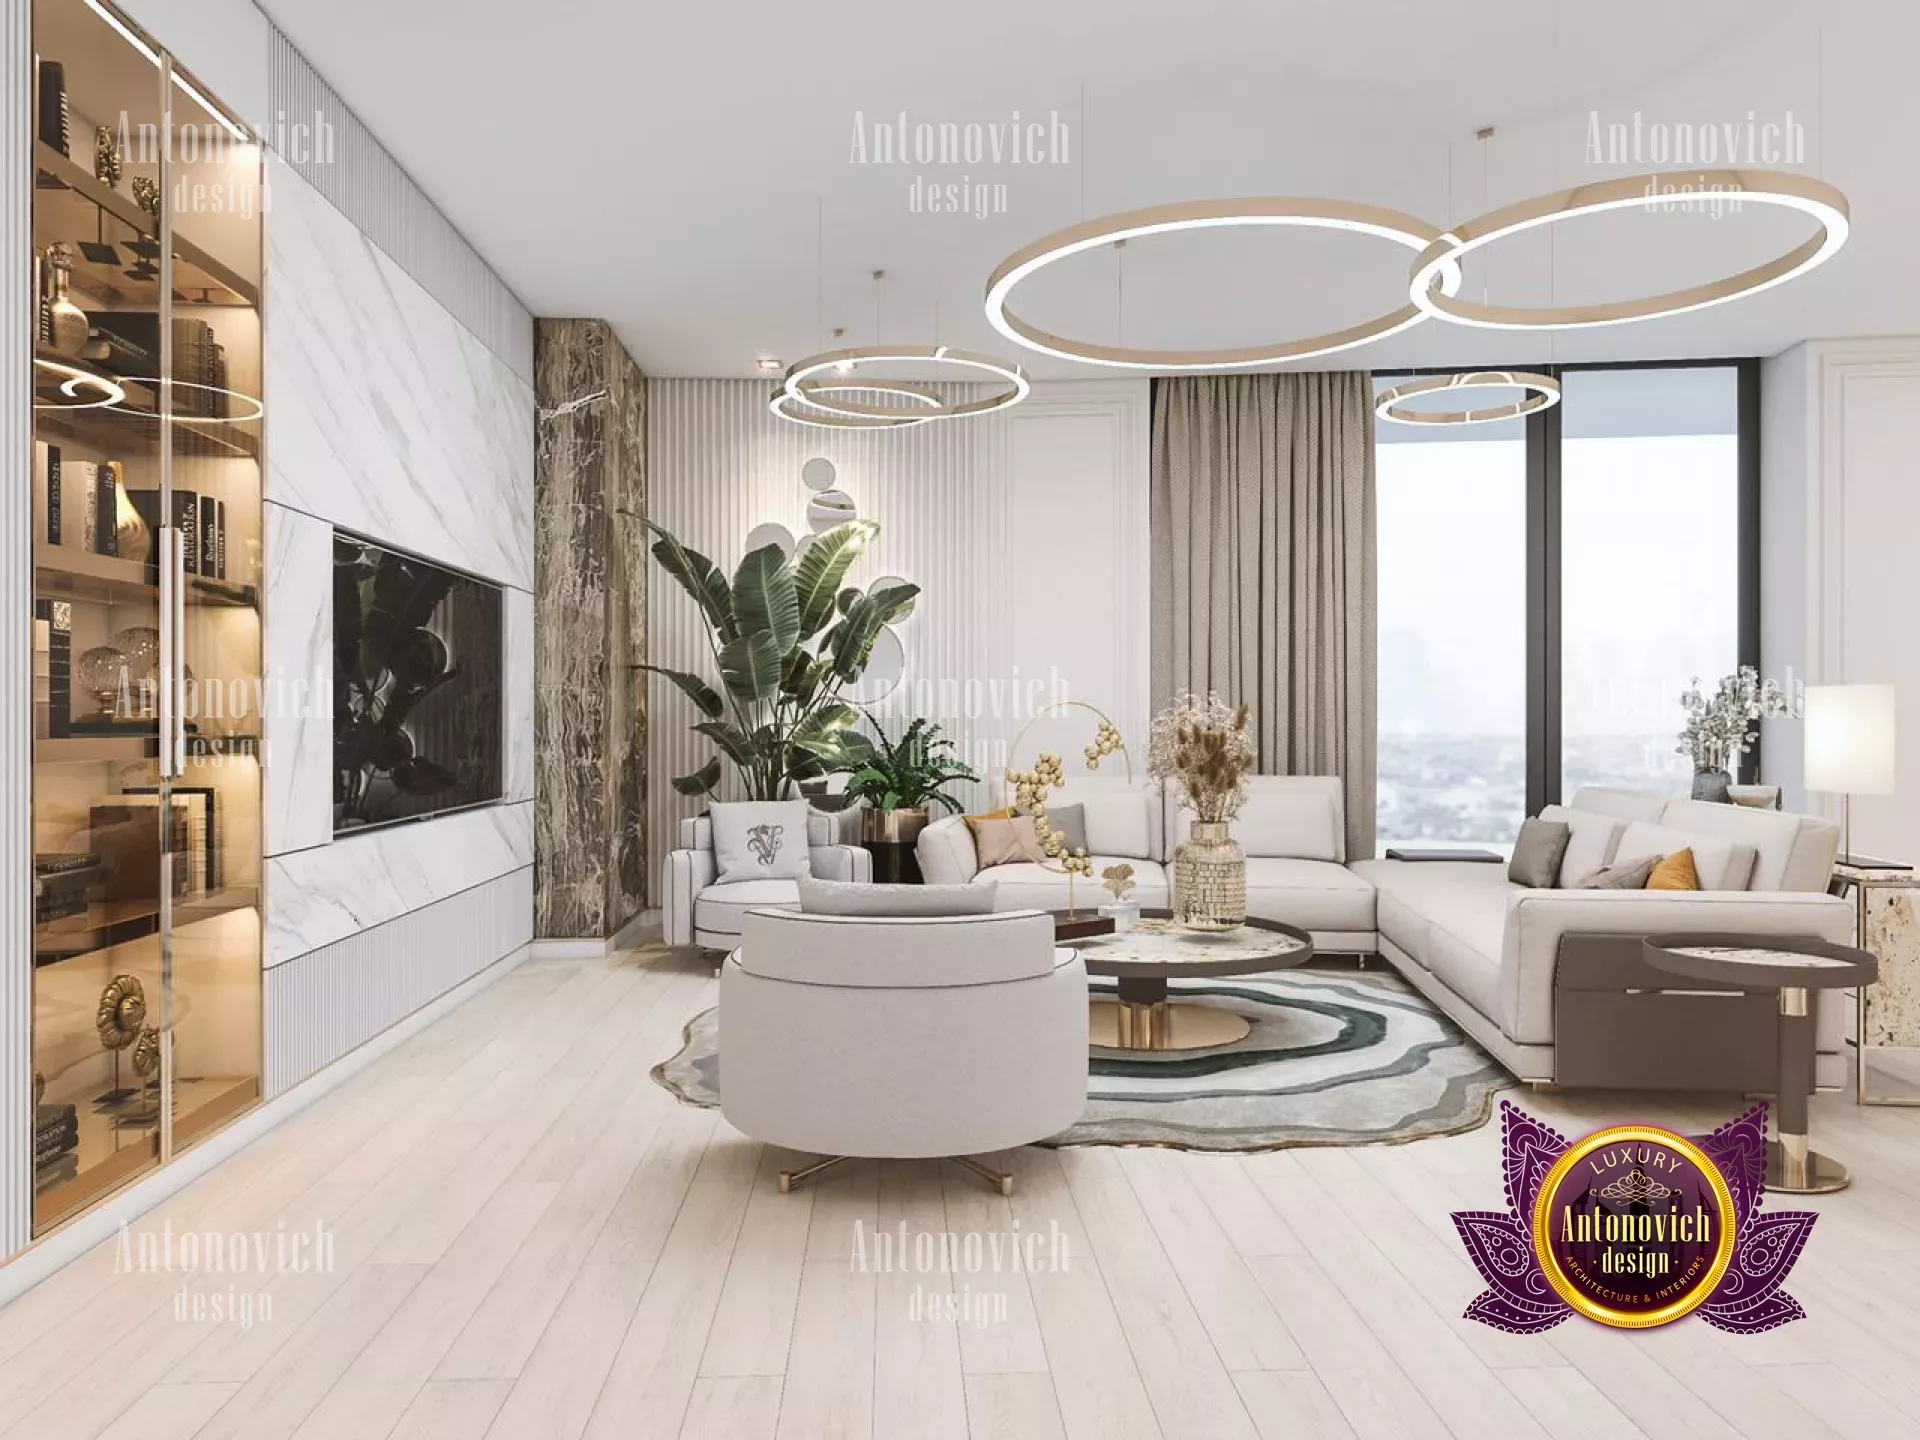 Need Design Help For Living Room Dubai